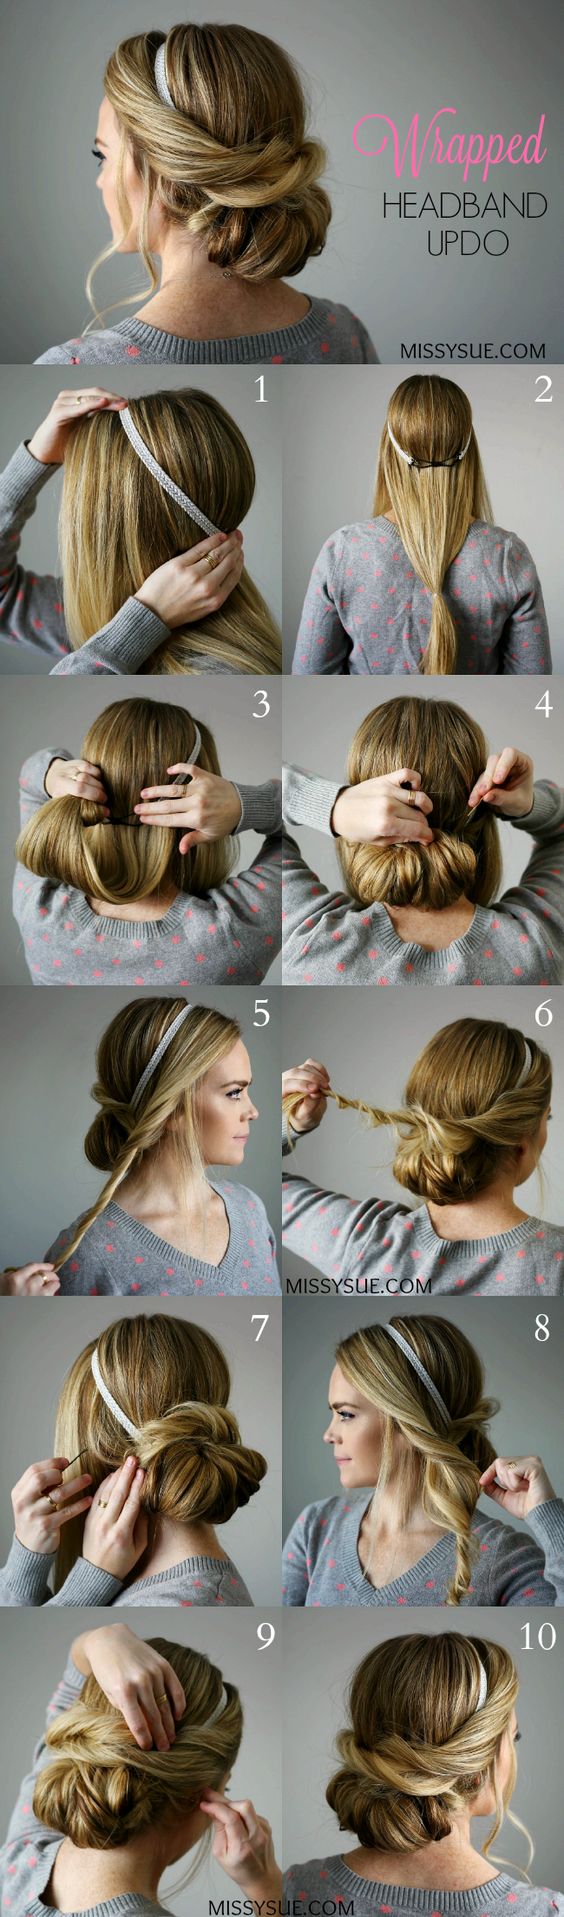 60 Easy Step by Step Hair Tutorials for Long, Medium,Short Hair - Her Style  Code